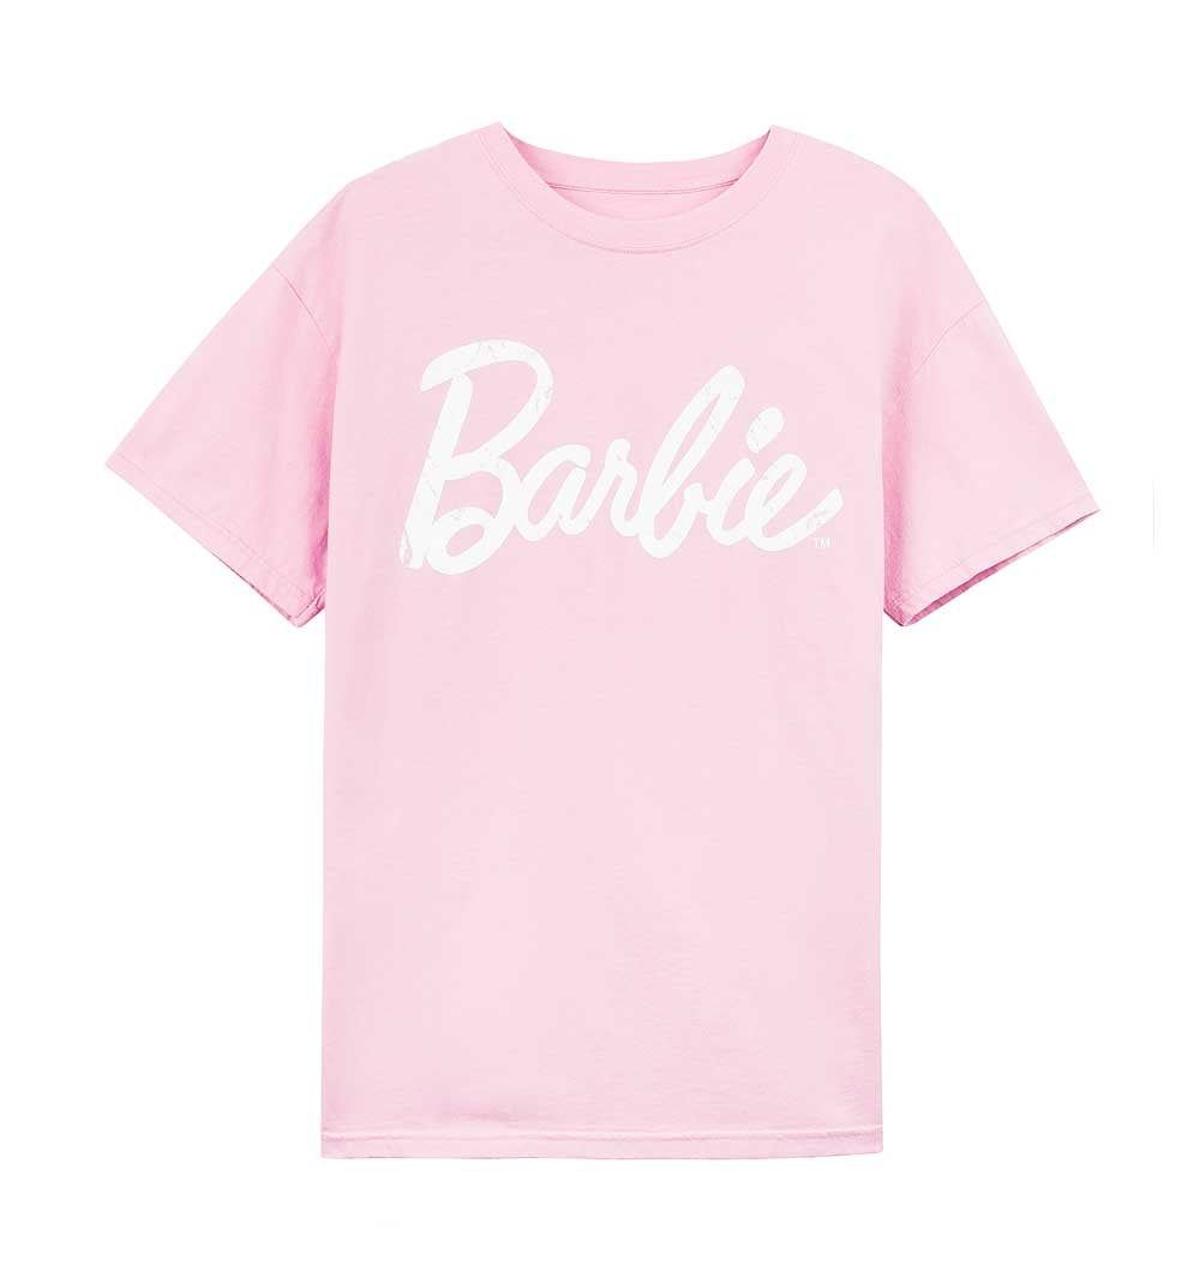 Camiseta rosa de Barbie de Bershka. (Precio: 12, 99 euros)